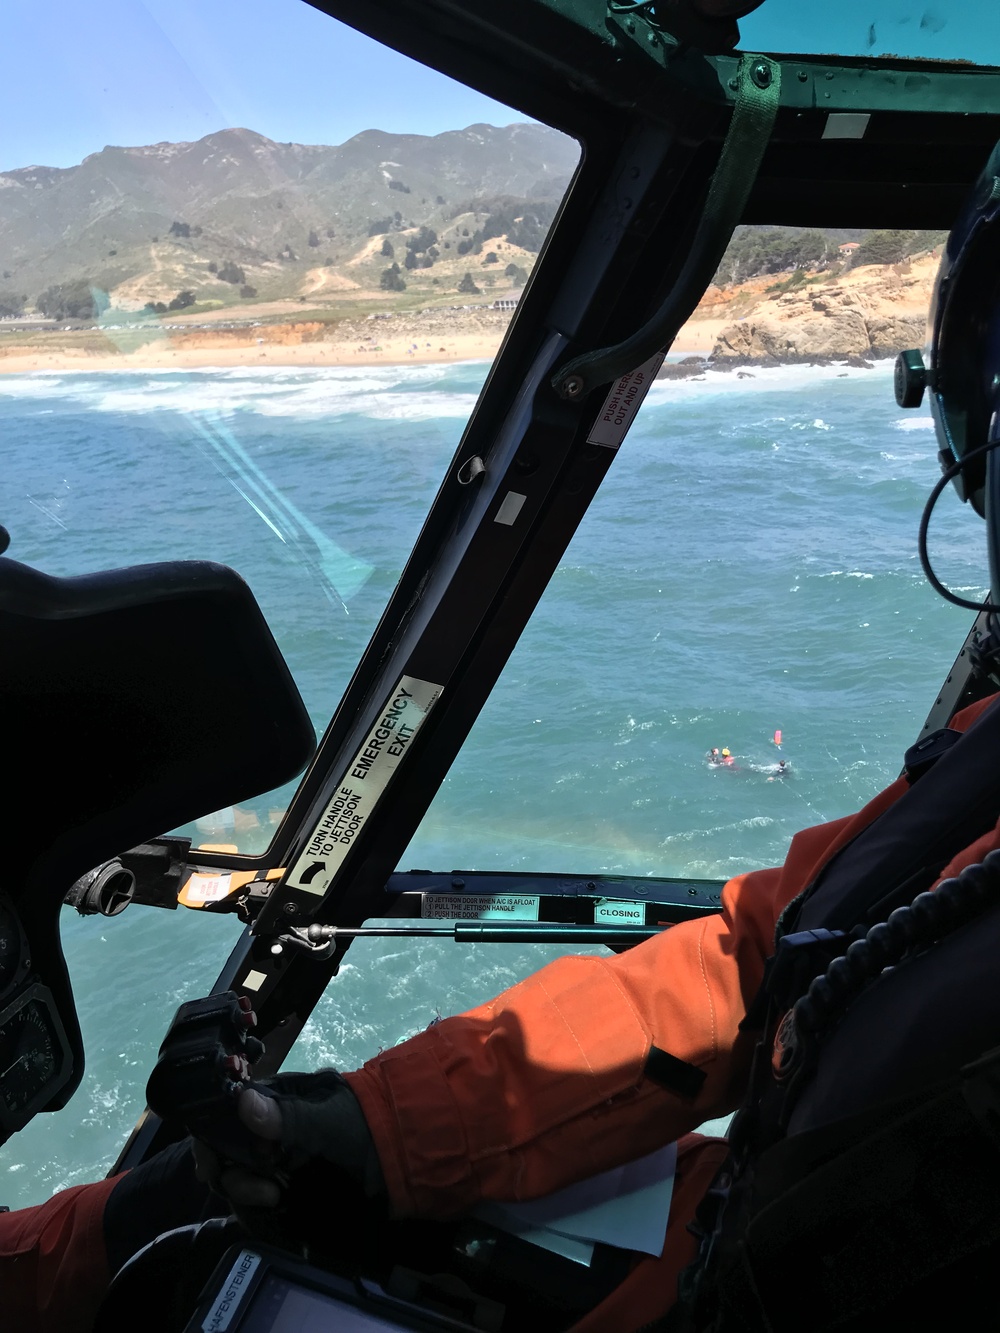 Coast Guard, lifeguard rescue surfer near Half Moon Bay